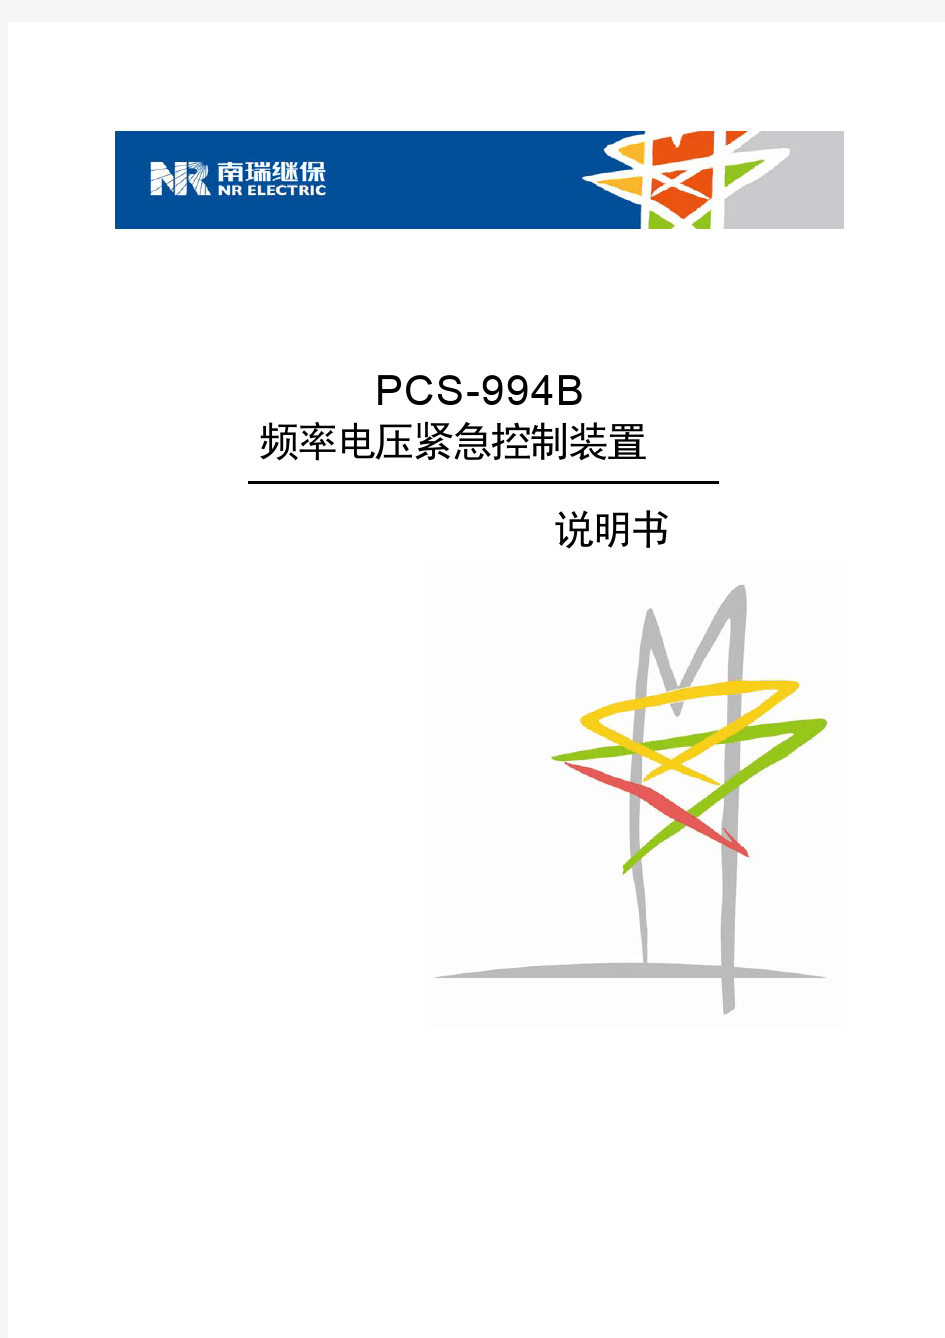 PCS-994B_X_频率电压紧急控制装置说明书_国内中文_国内标准版_X_R1.01